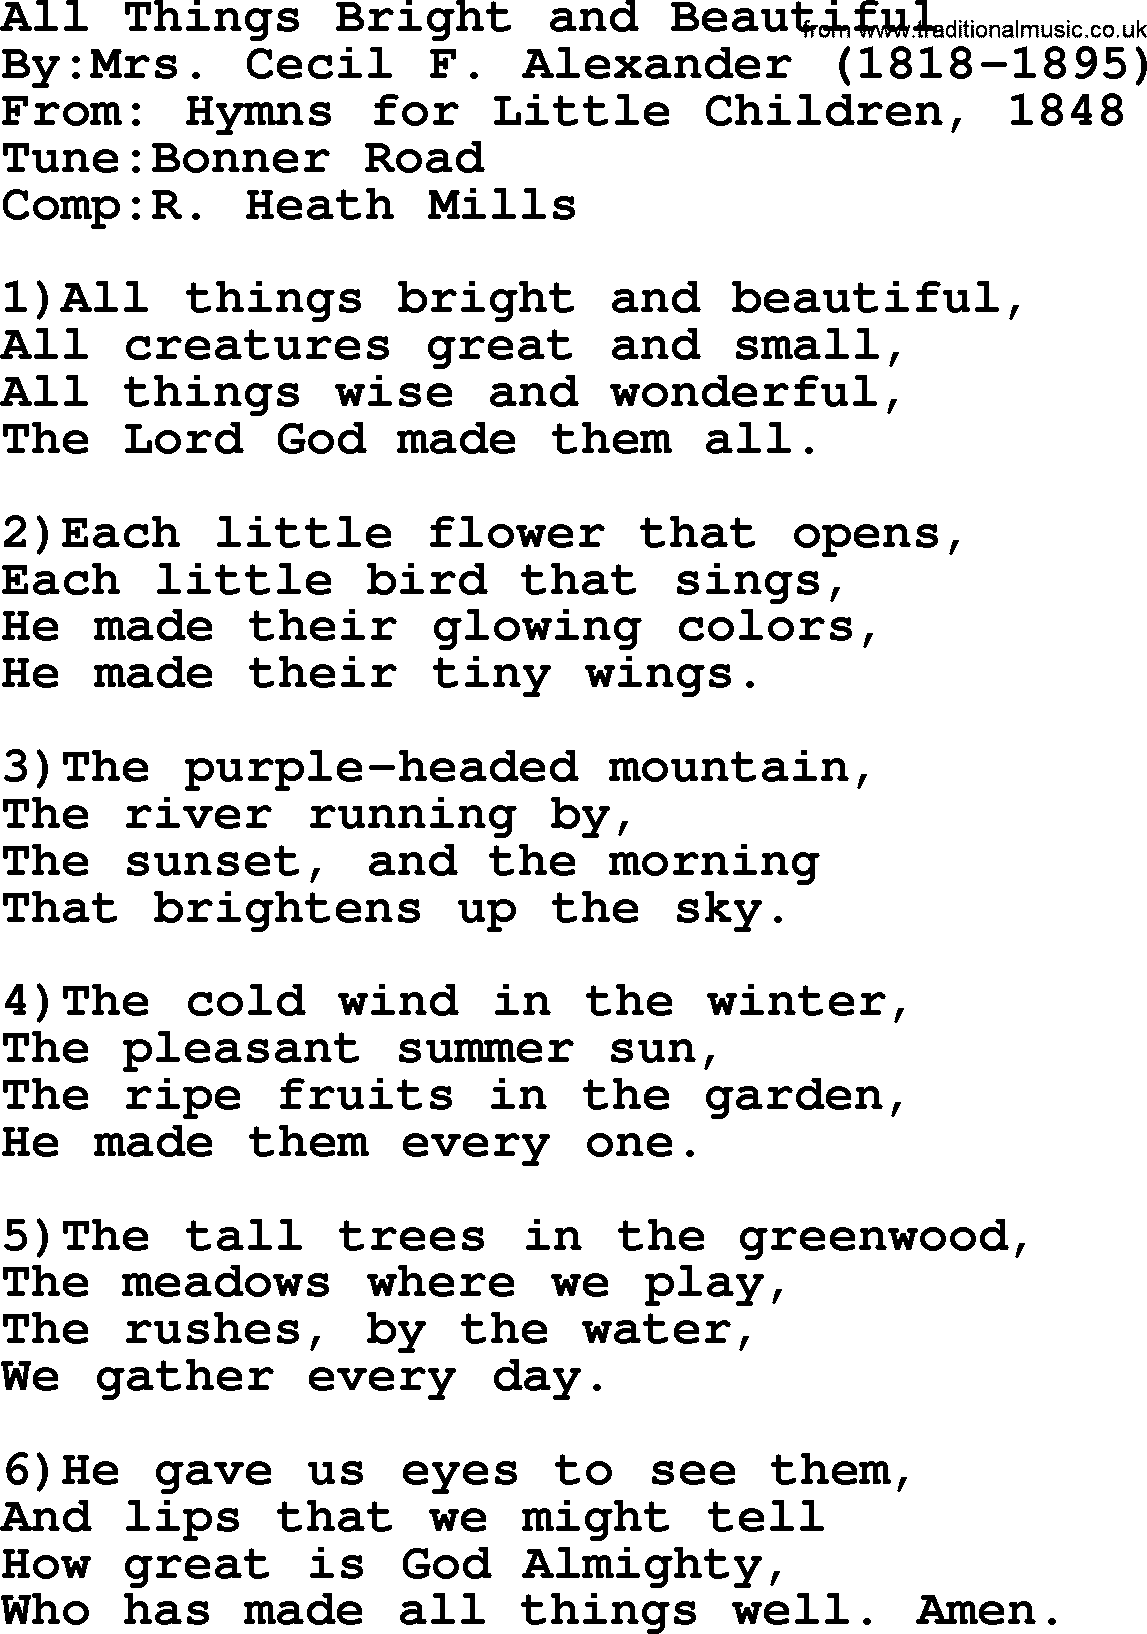 Methodist Hymn: All Things Bright And Beautiful, lyrics